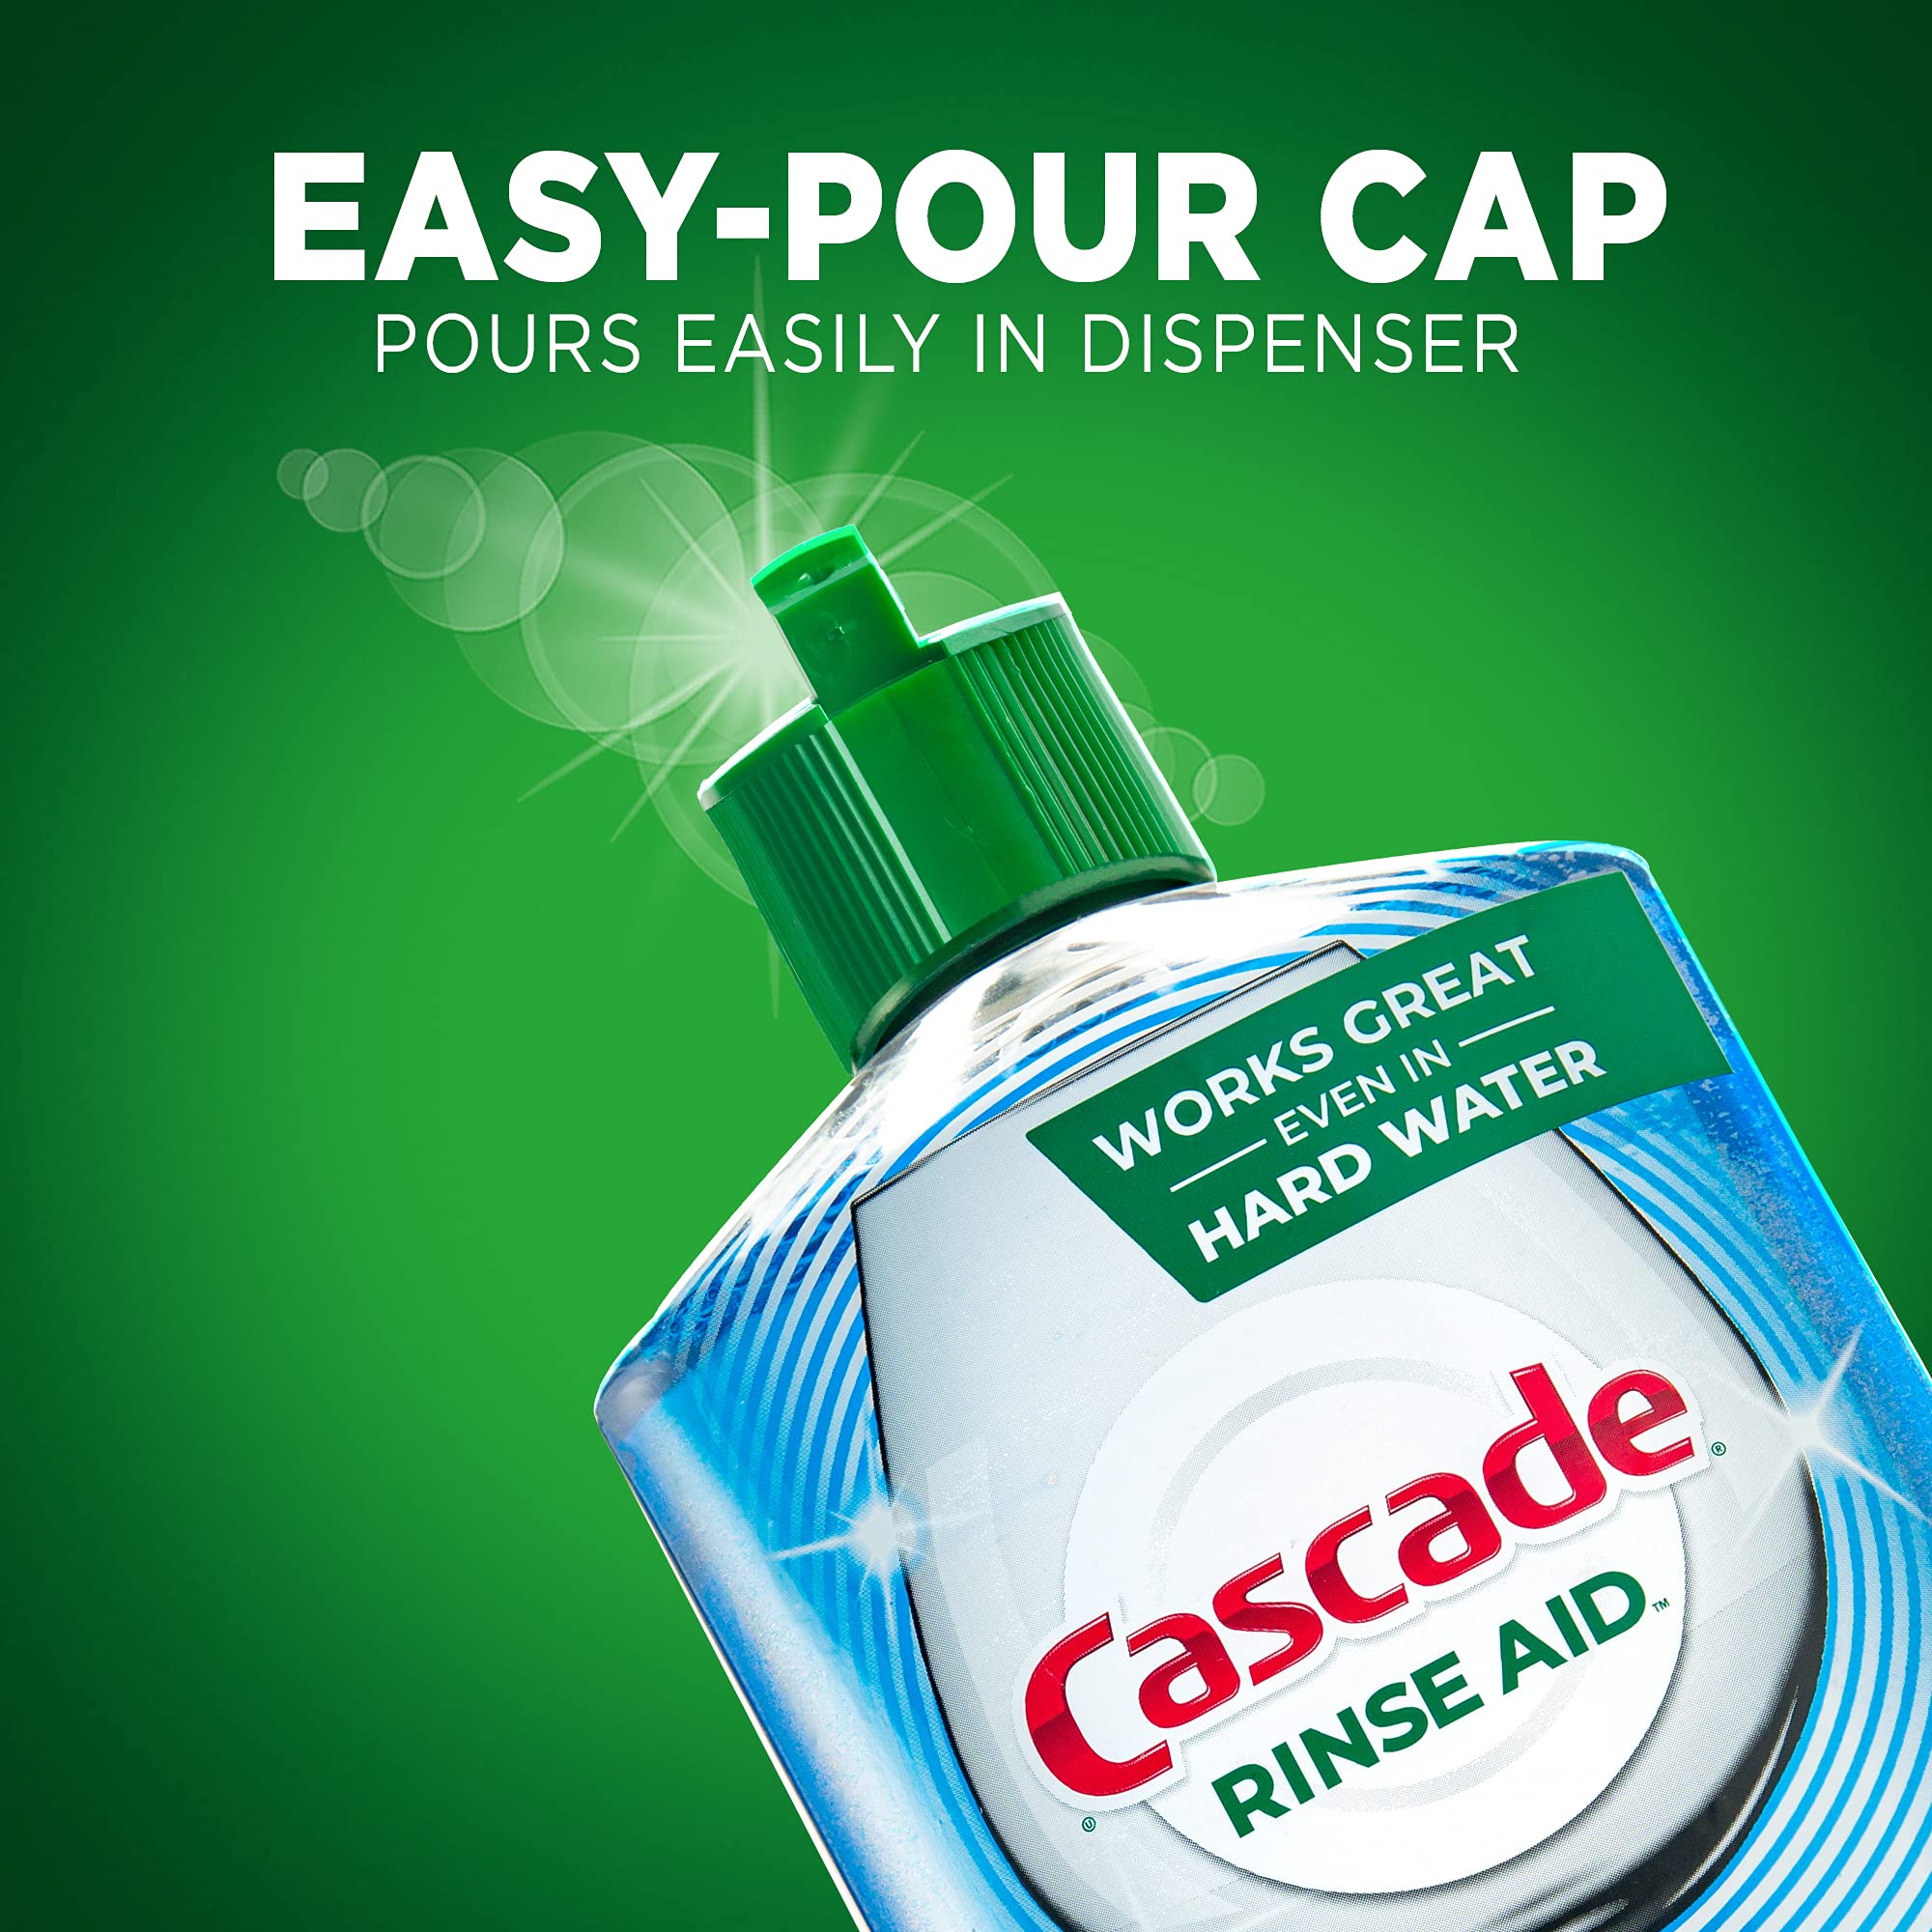 Cascade Rinse Aid Platinum, Dishwasher Rinse Agent, Regular Scent, 30.5 Fl Oz (Pack of 1)